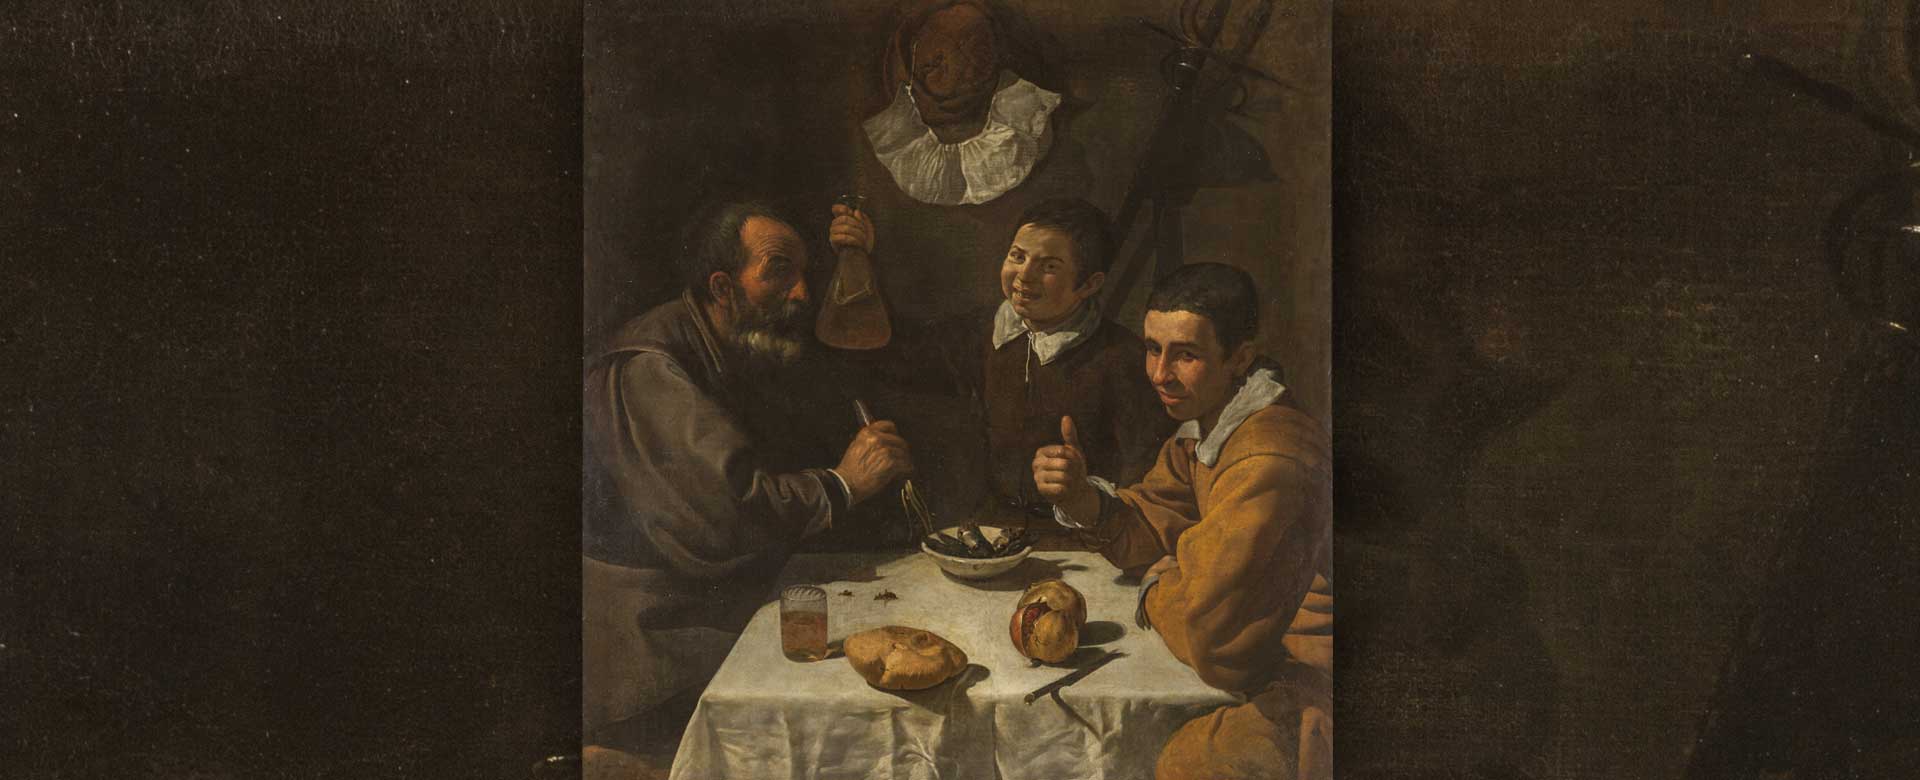 "Il pranzo" di Velàzquez